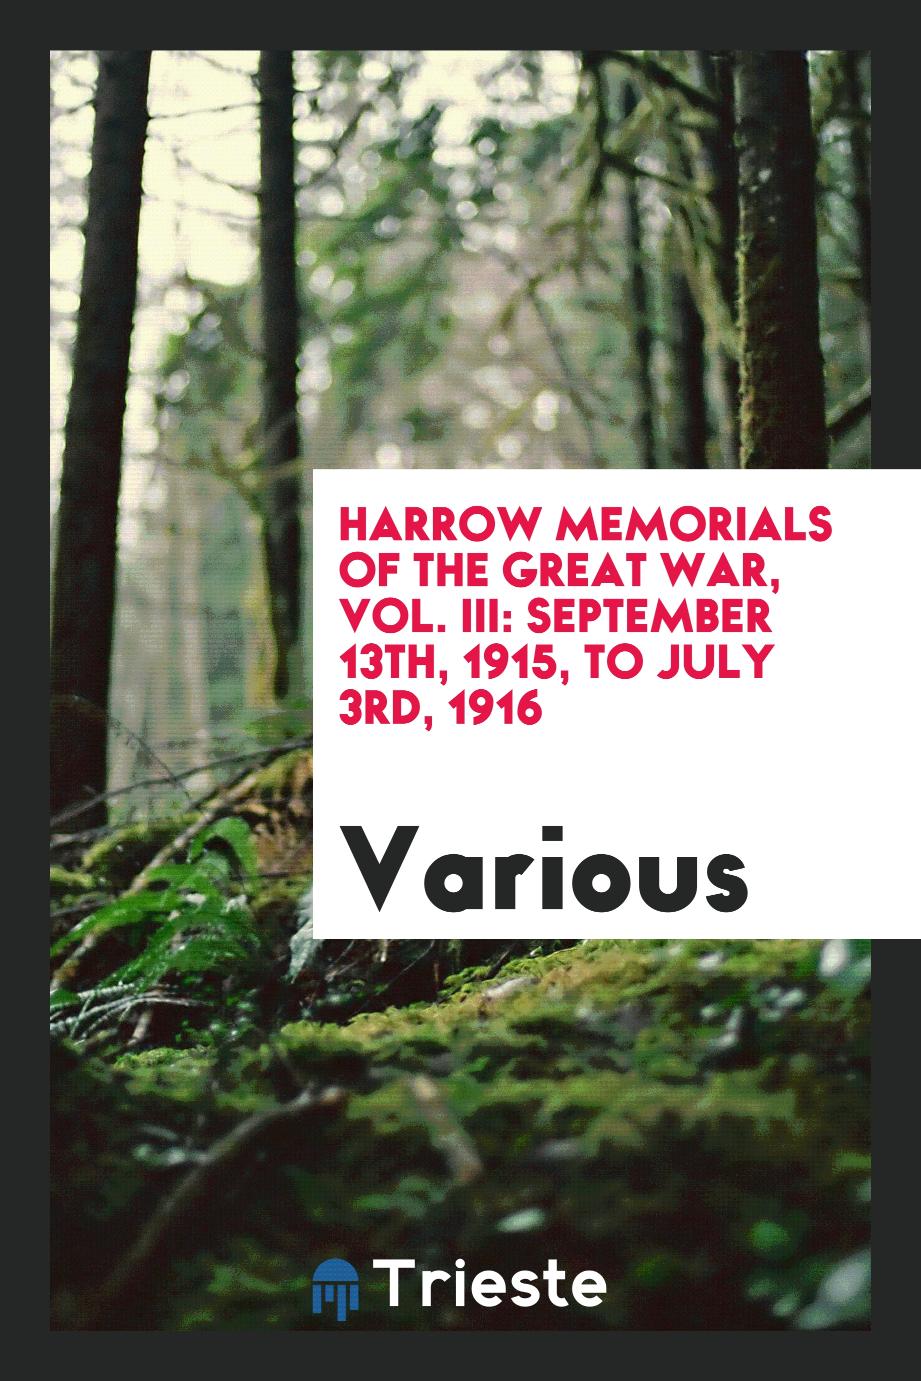 Harrow memorials of the great war, Vol. III: September 13th, 1915, to July 3rd, 1916